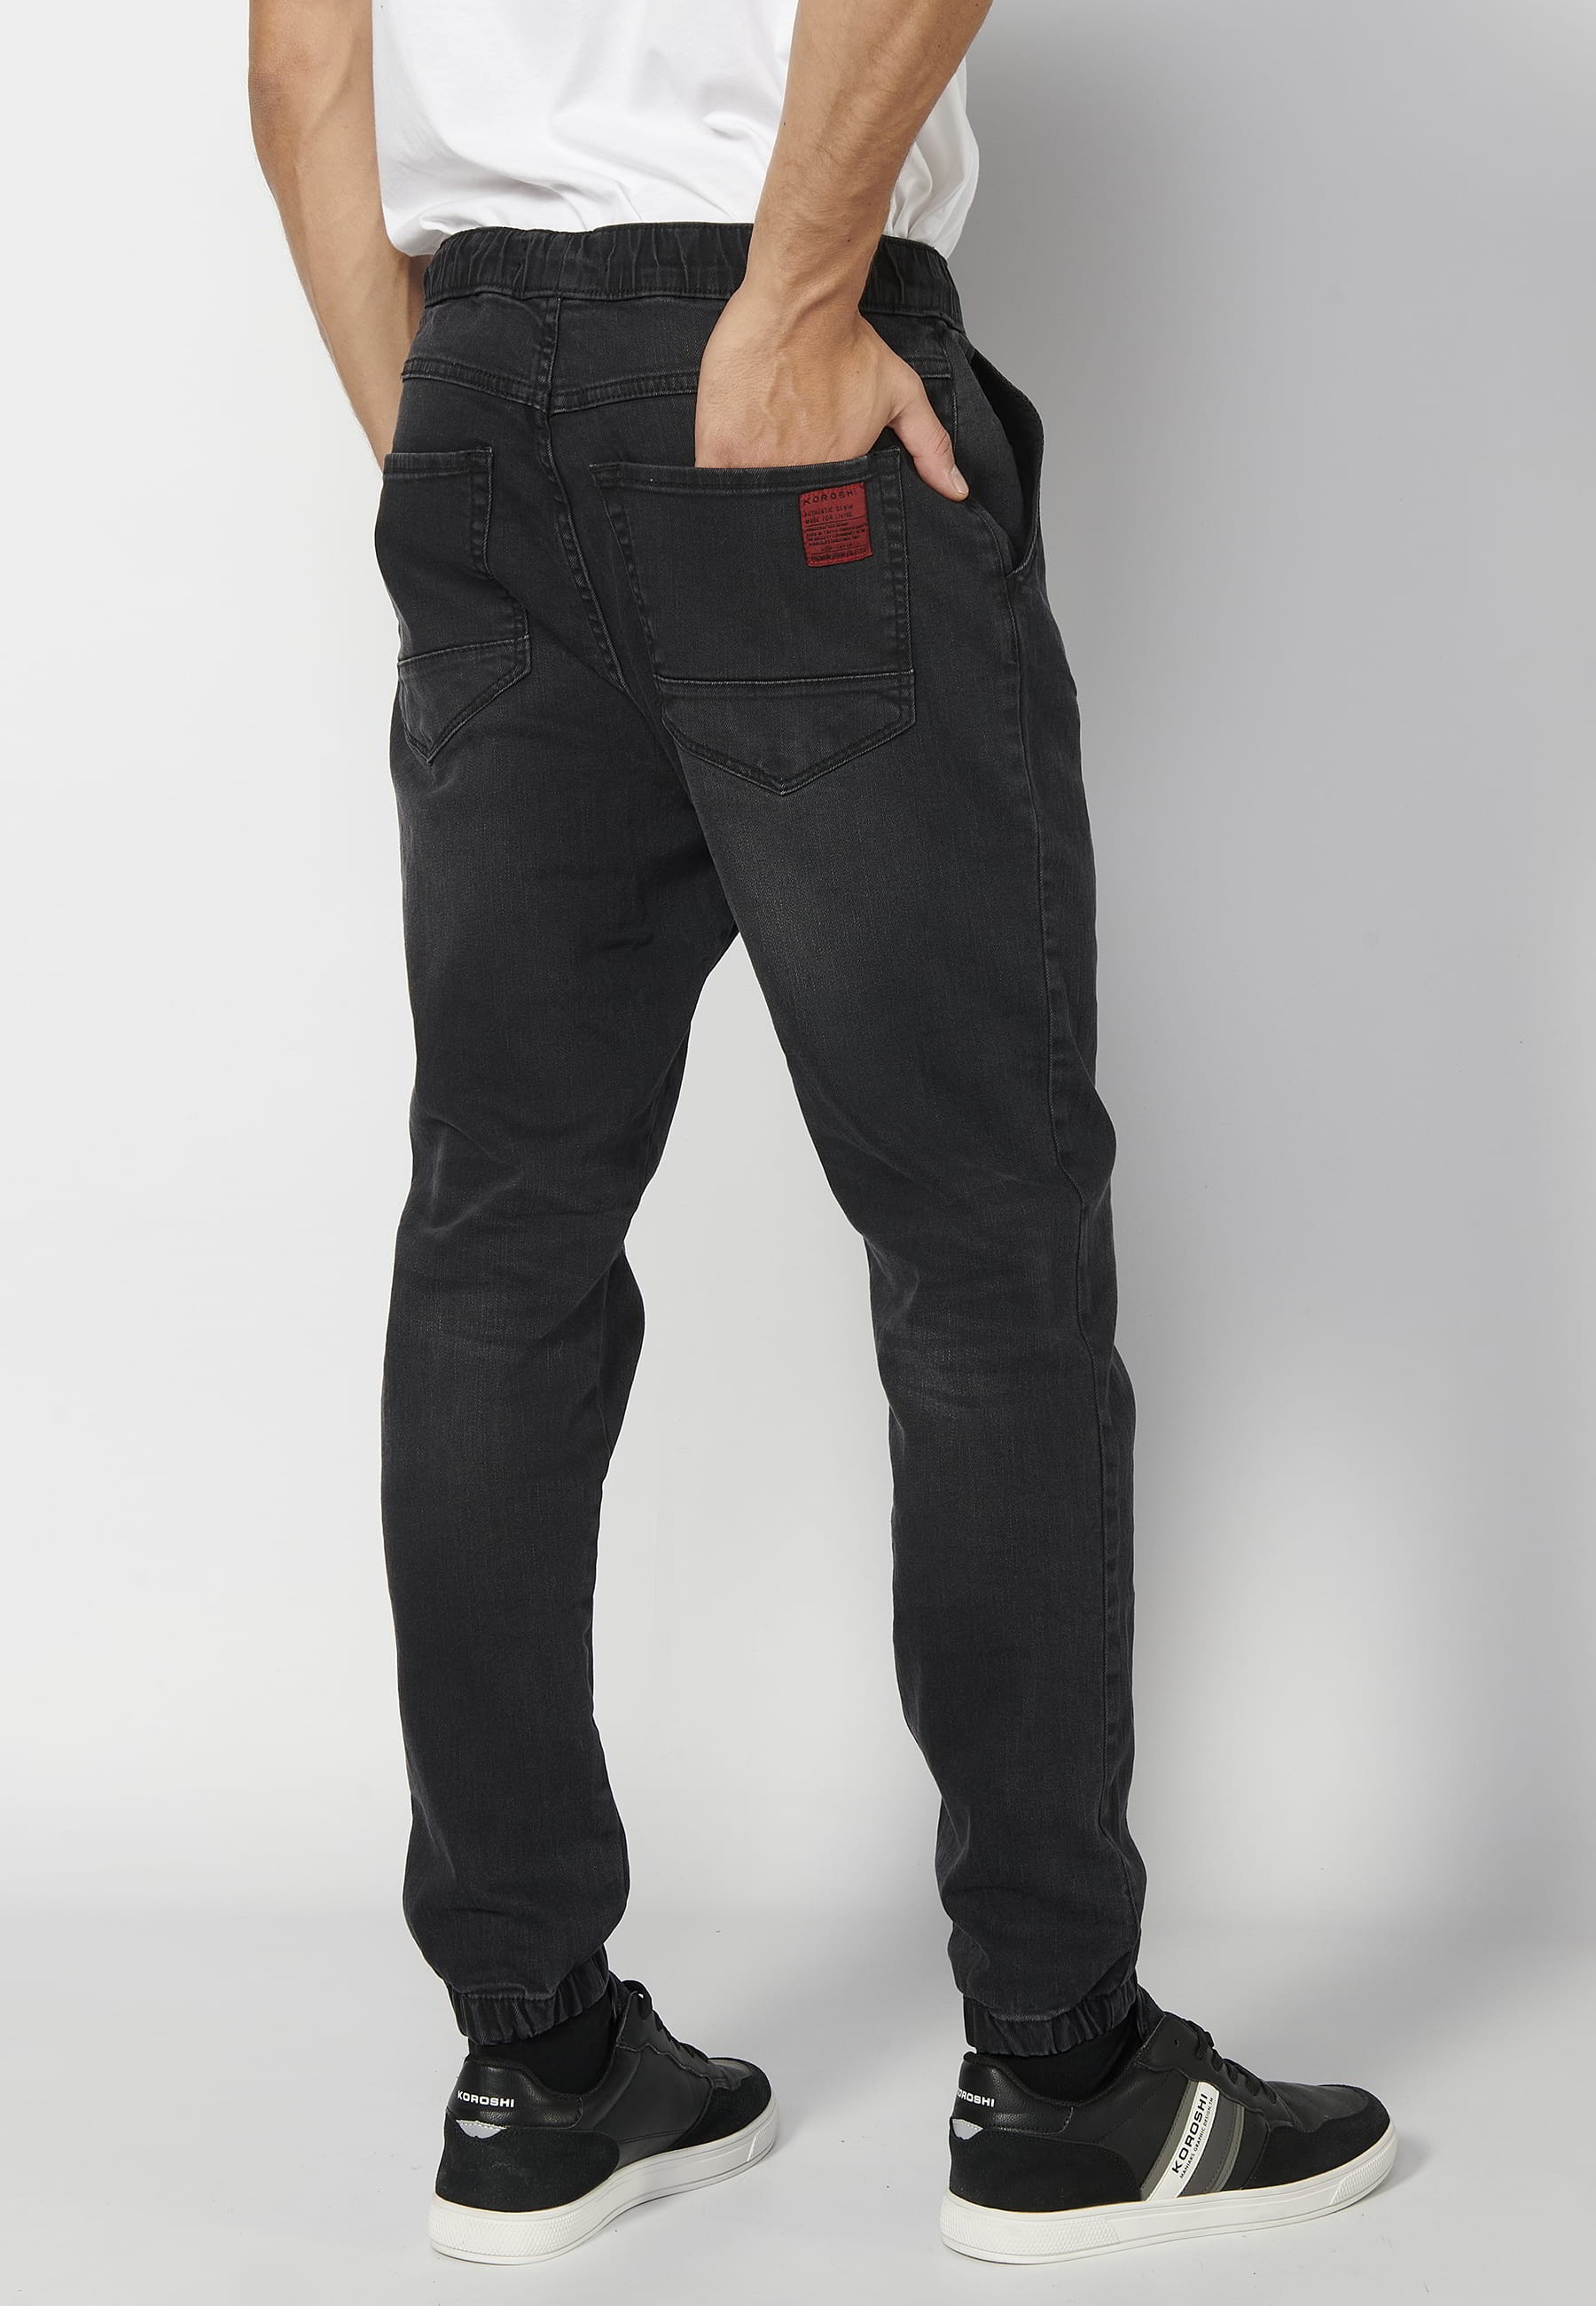 Black elastic waist long jogger pants for Men 4